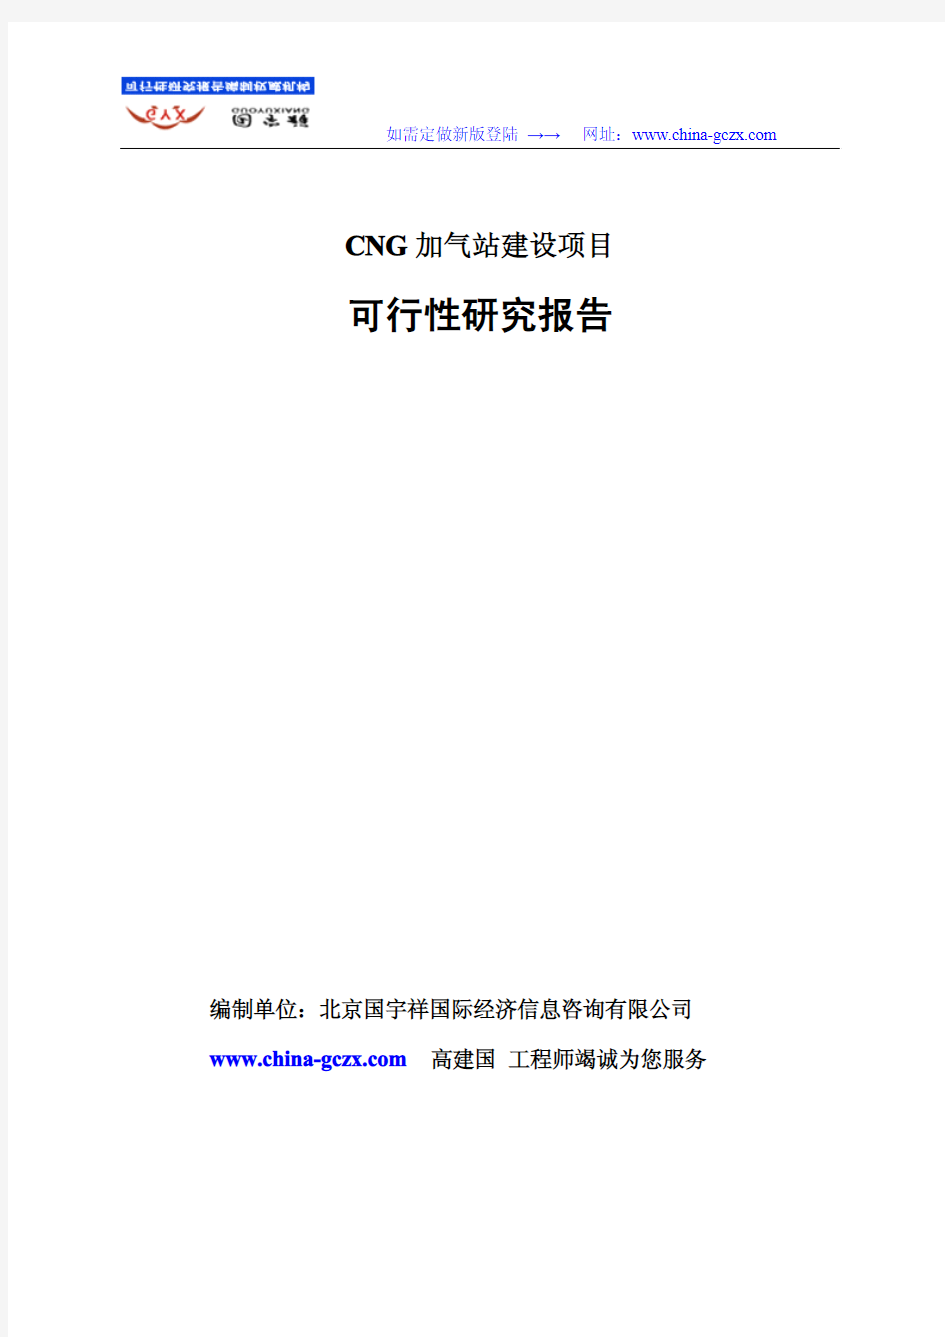 CNG加气站建设项目可行性研究报告(技术设计资料)